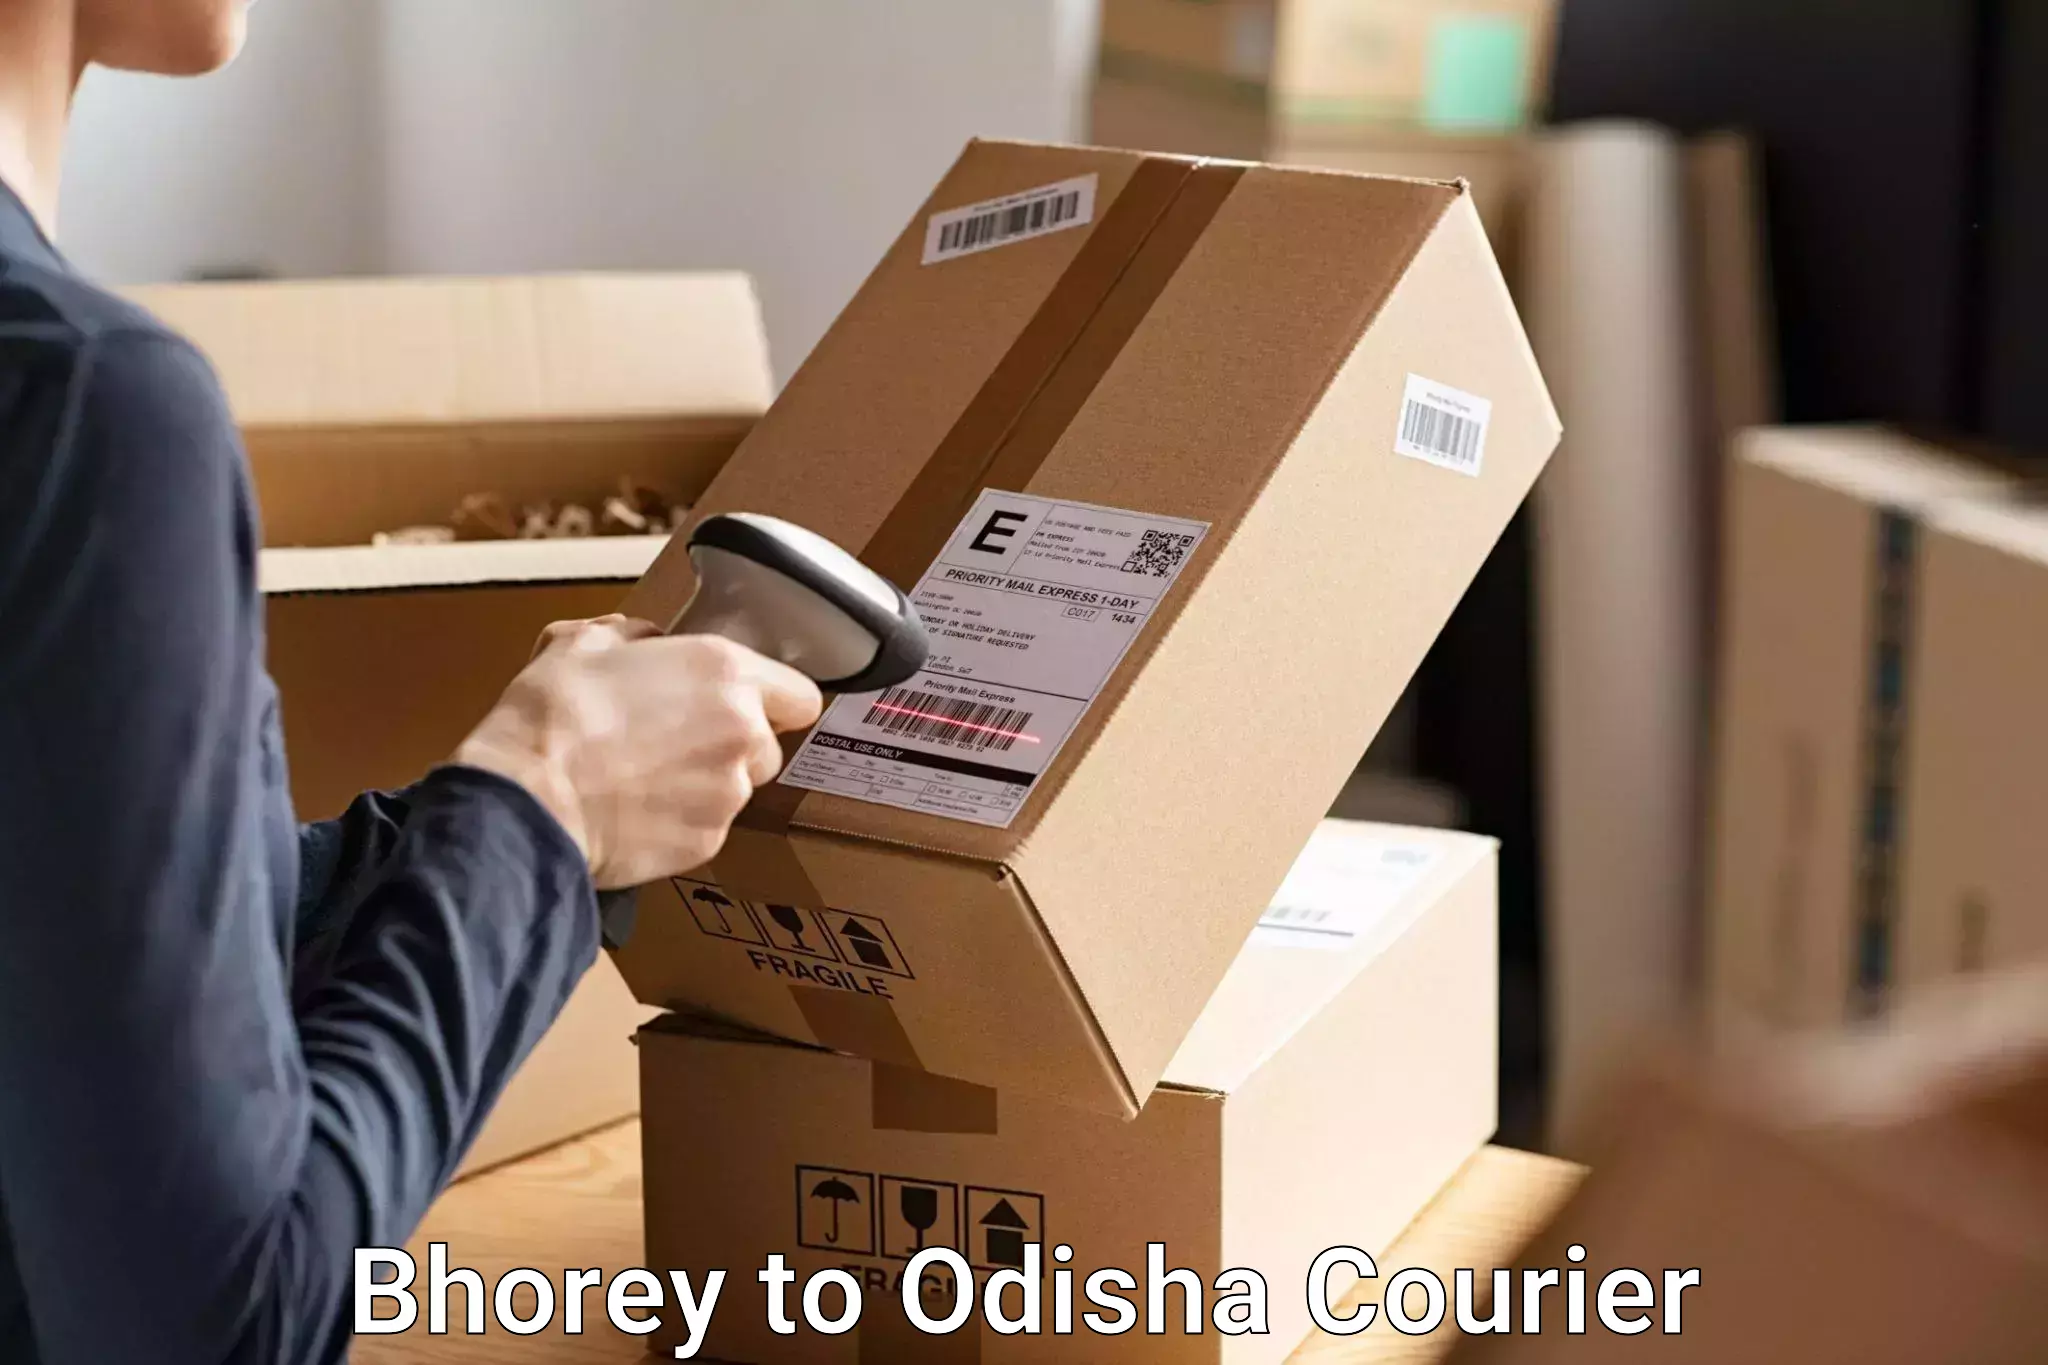 Luggage delivery app Bhorey to Baleswar